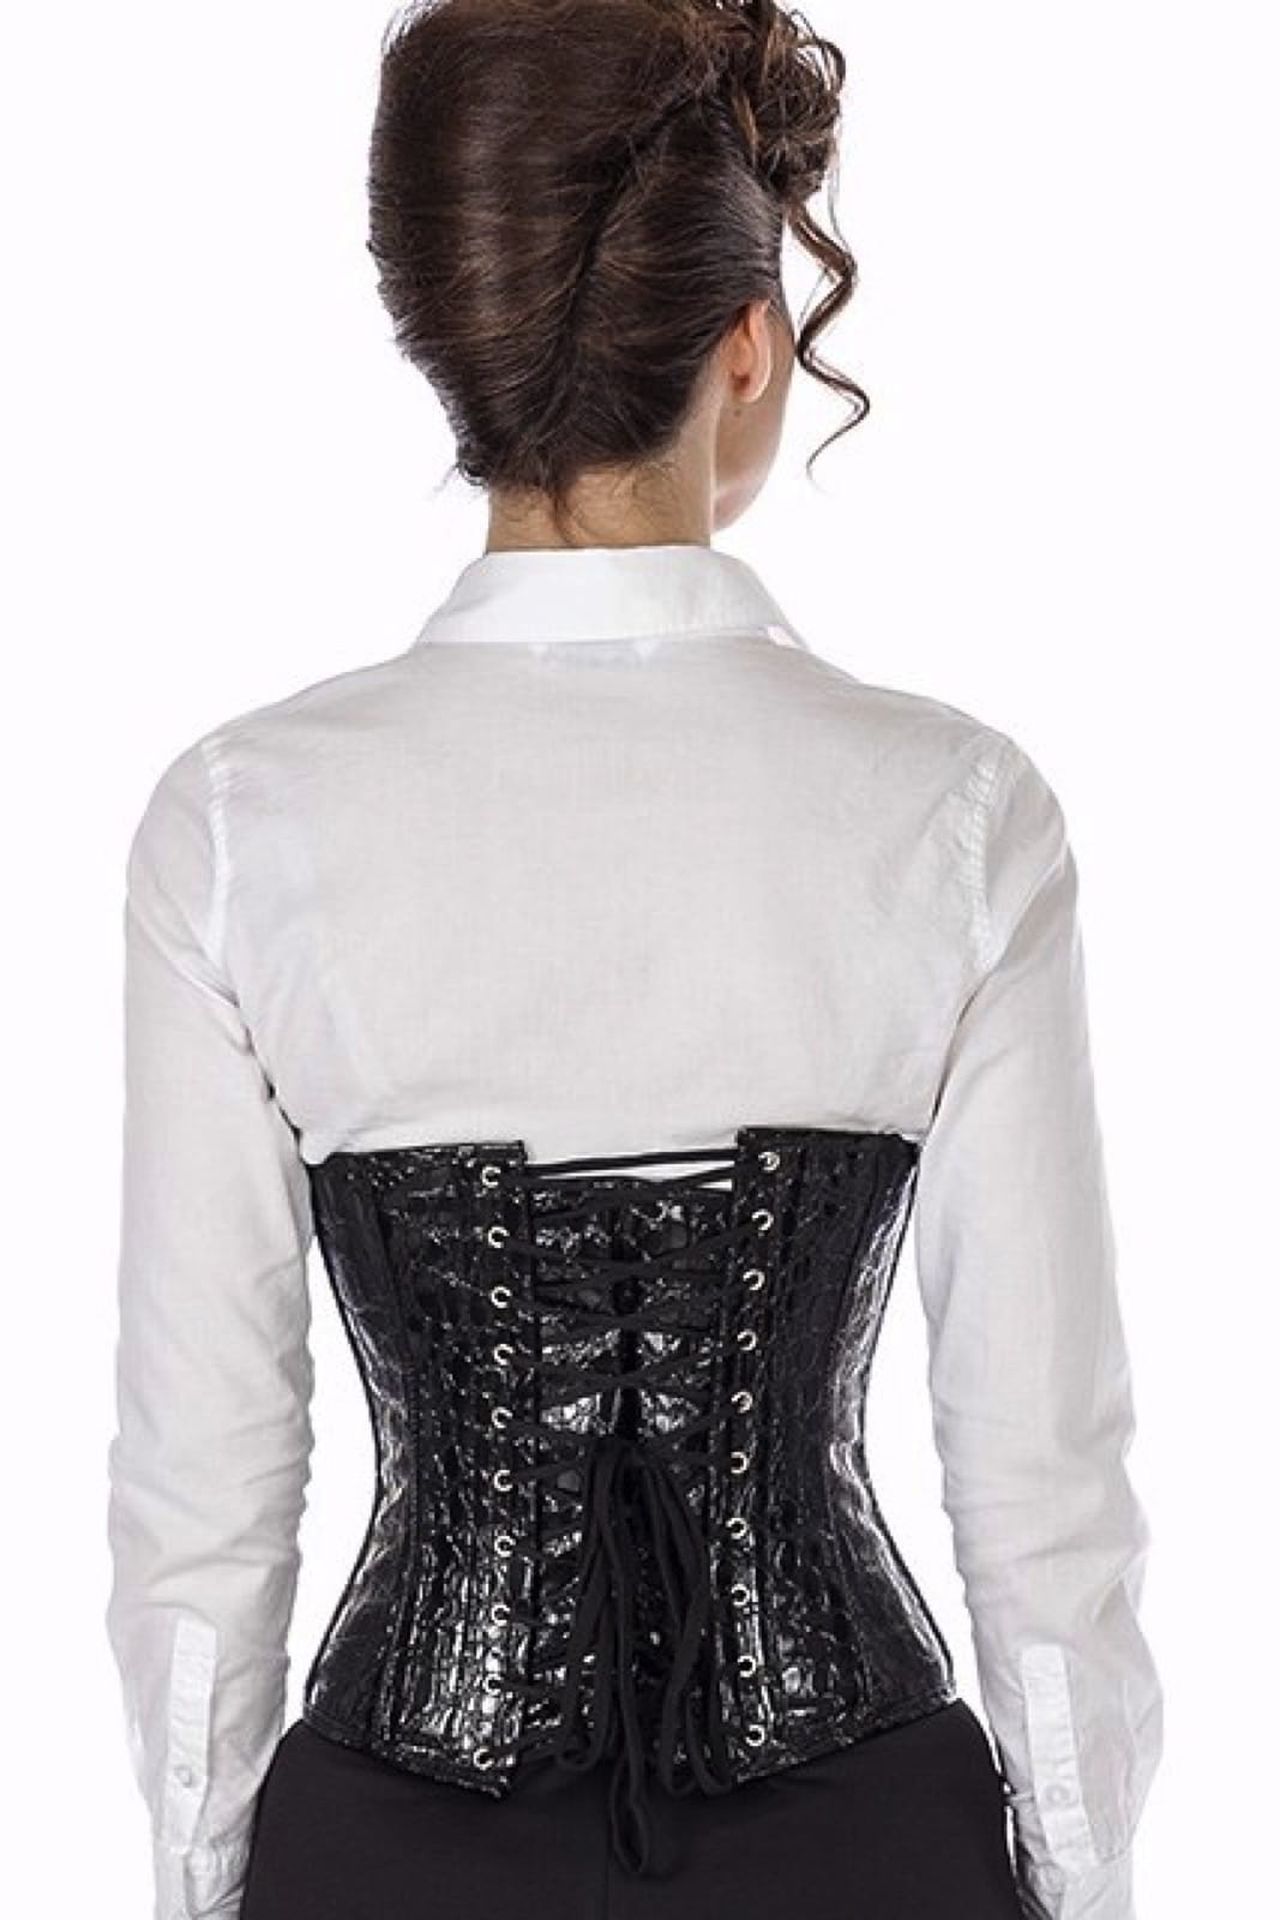 Lak corset zwart croco taille Korset pwK0